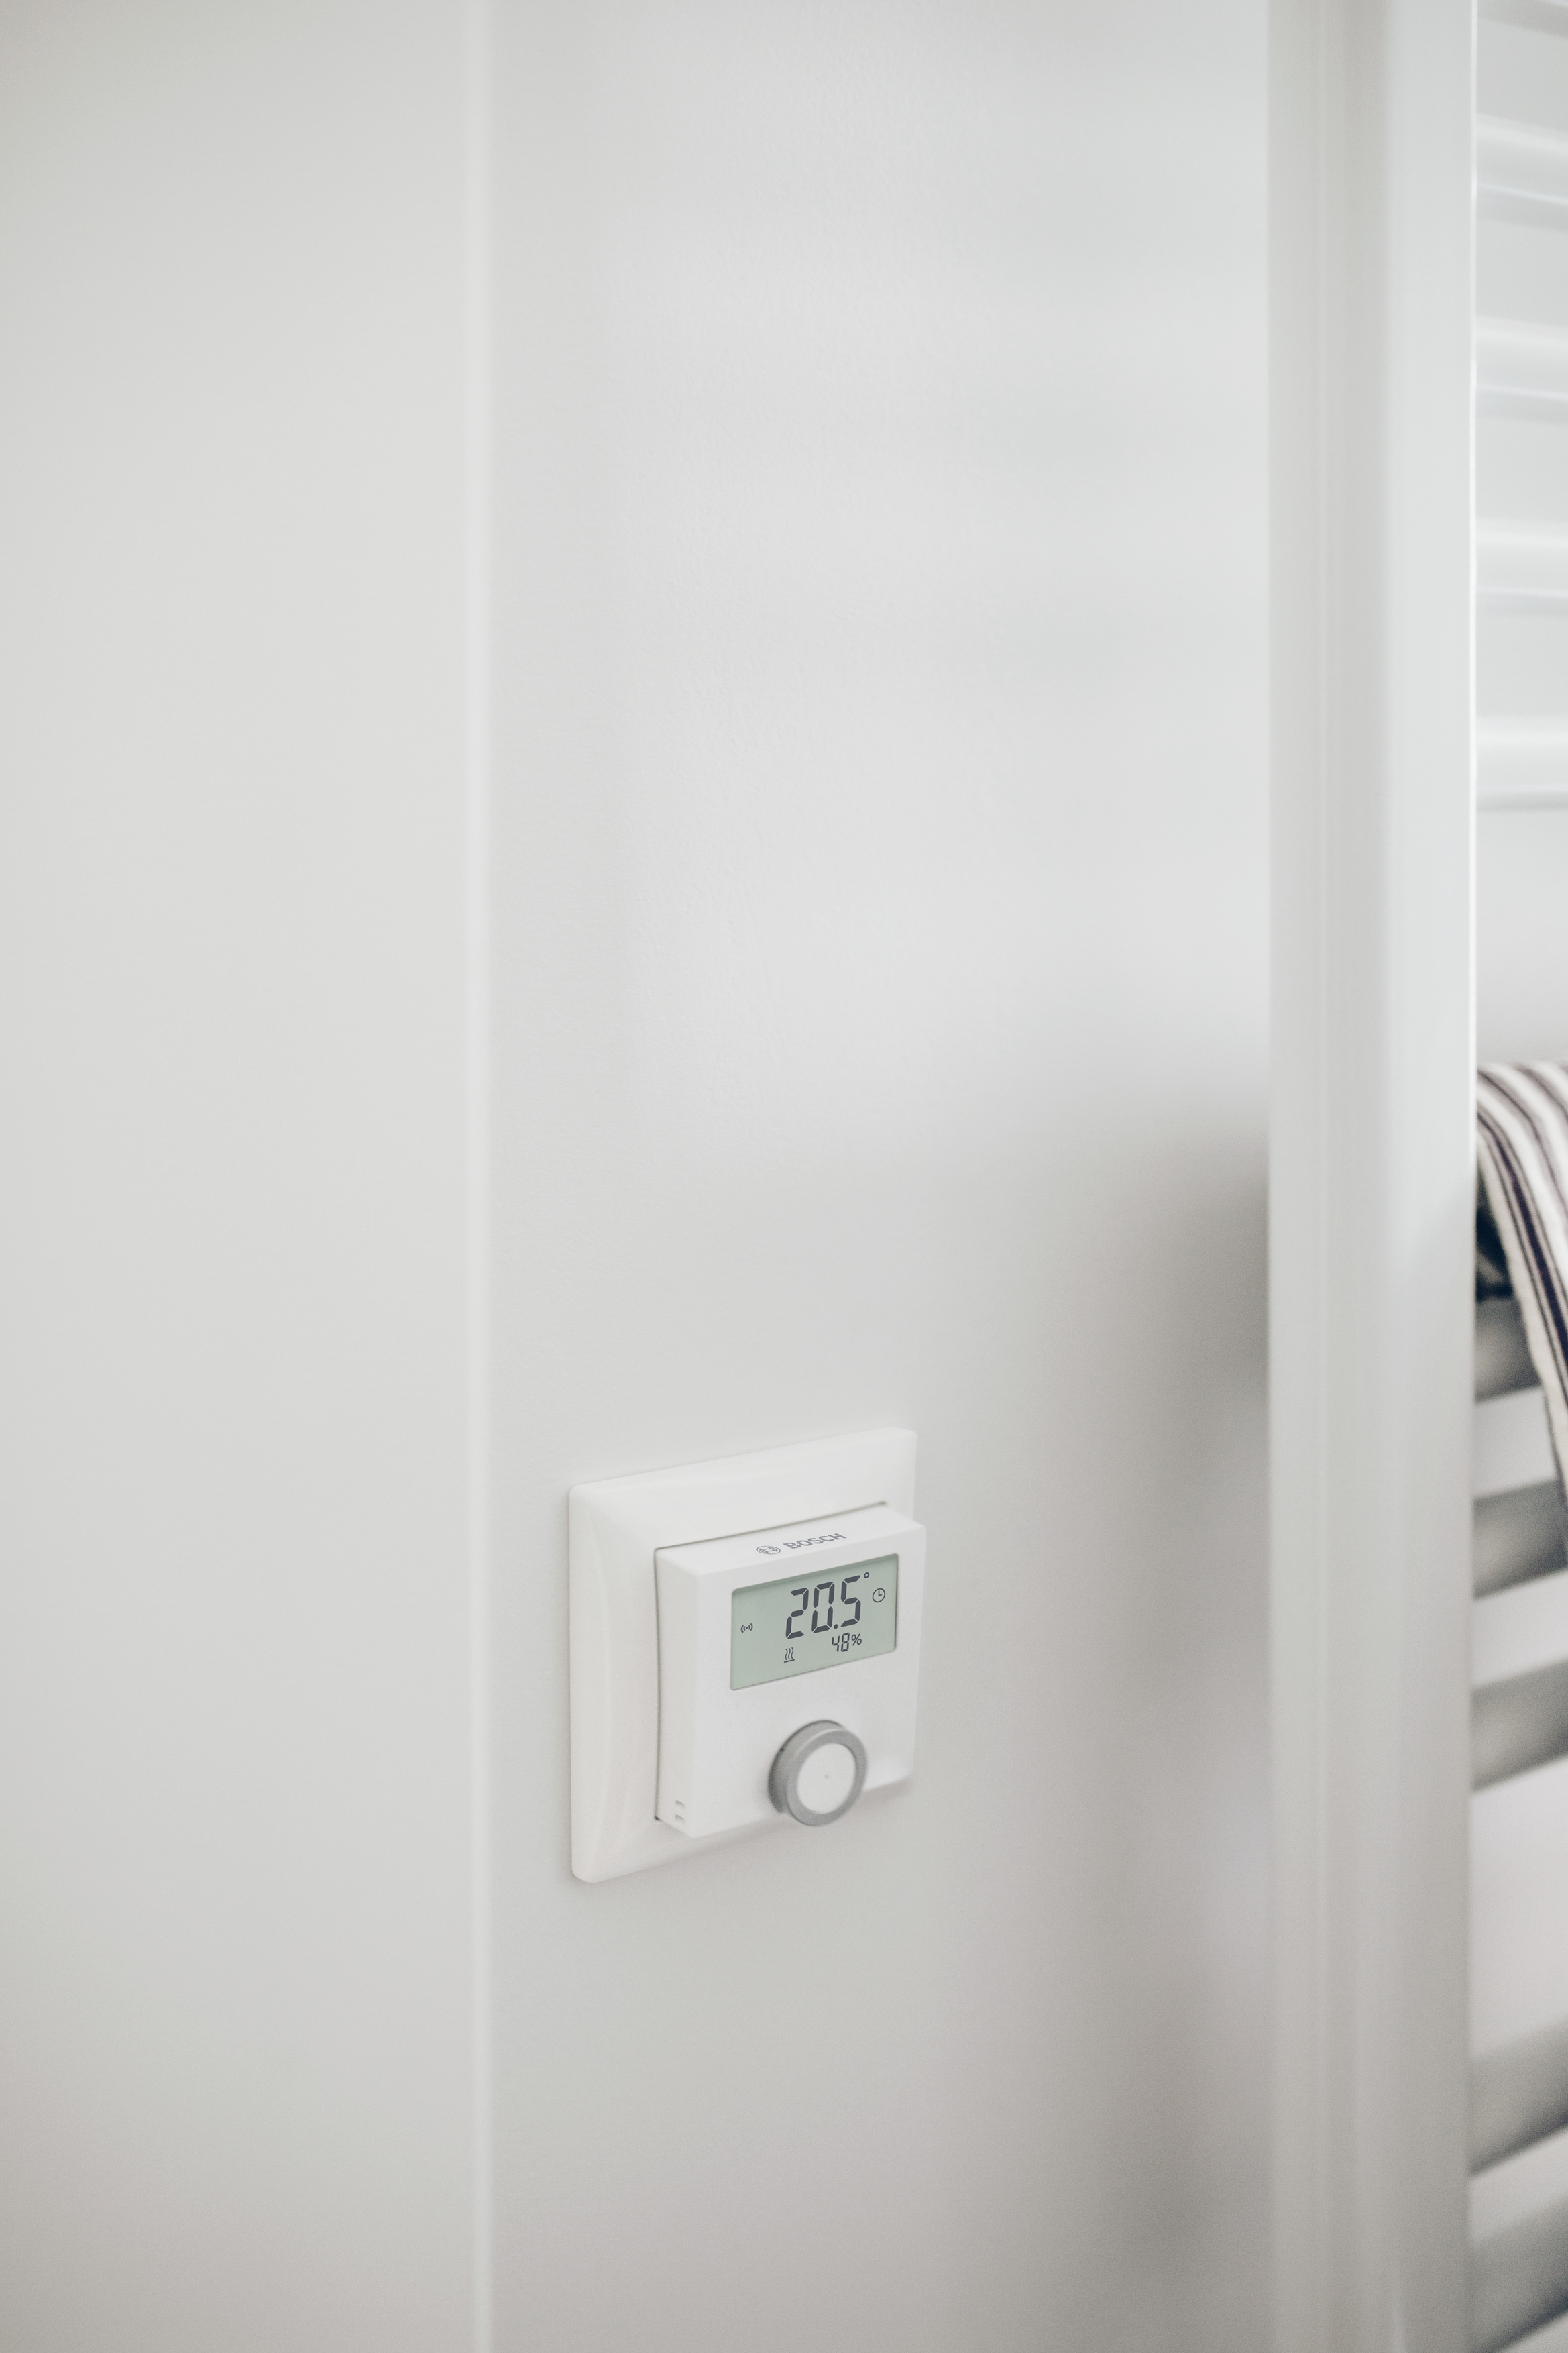 The Bosch Smart Home Room Thermostat - Bosch Media Service